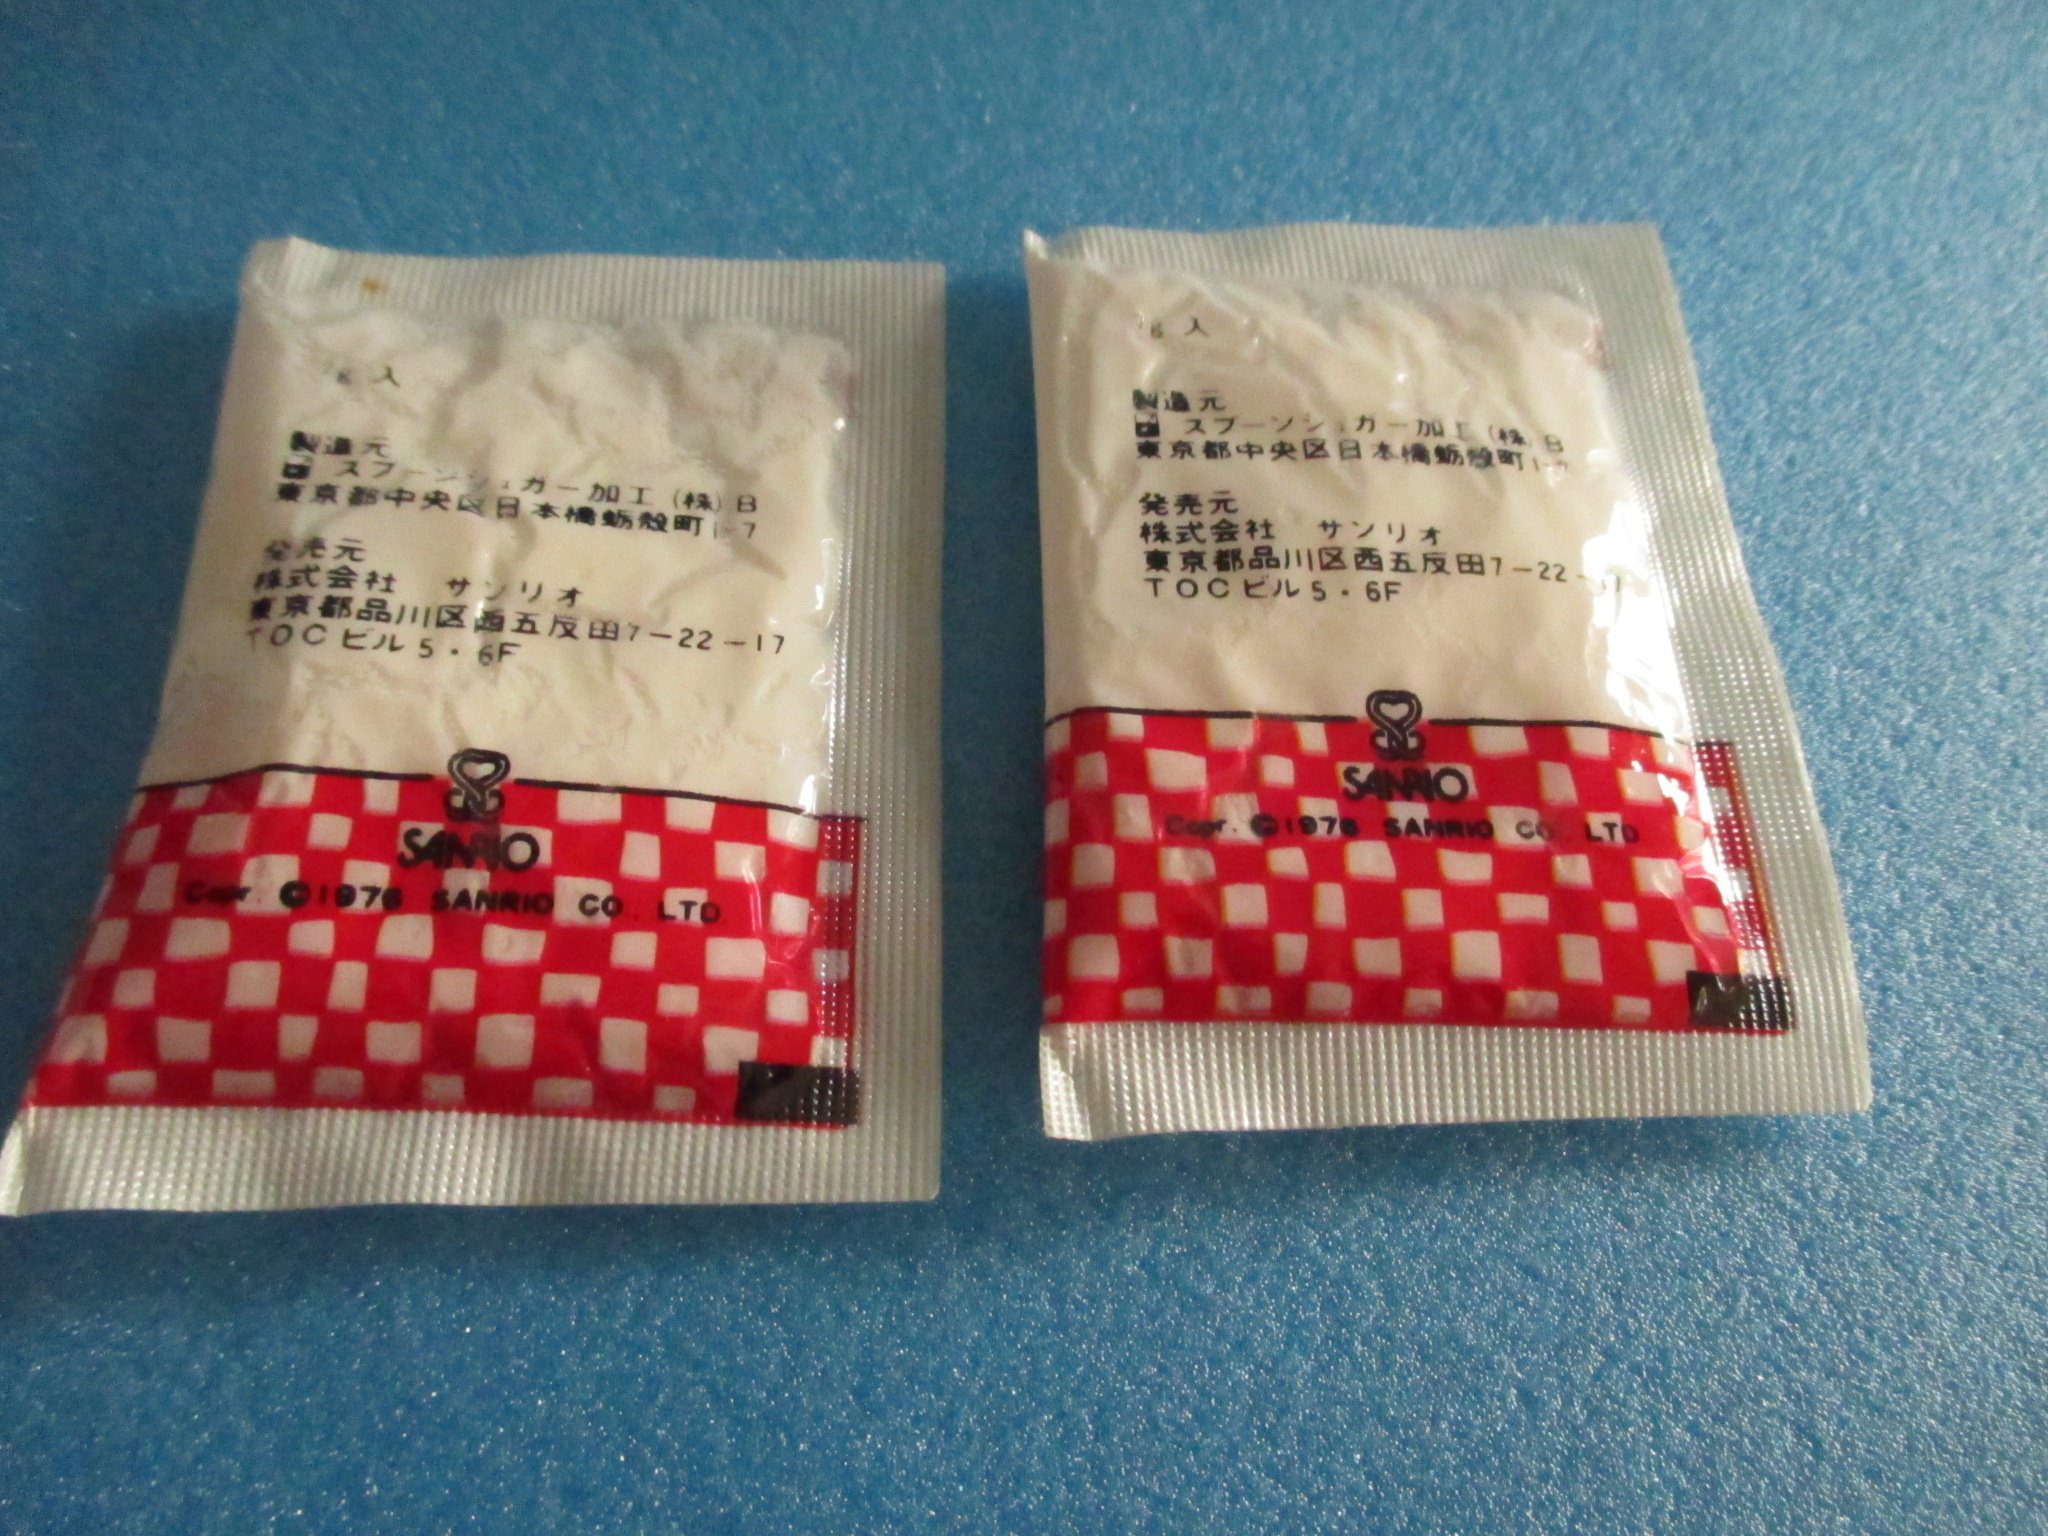  Sanrio pa чай &jimi- сахар shuga-2 пакет 1976[ б/у товар ]Patty &amp; Jimmy